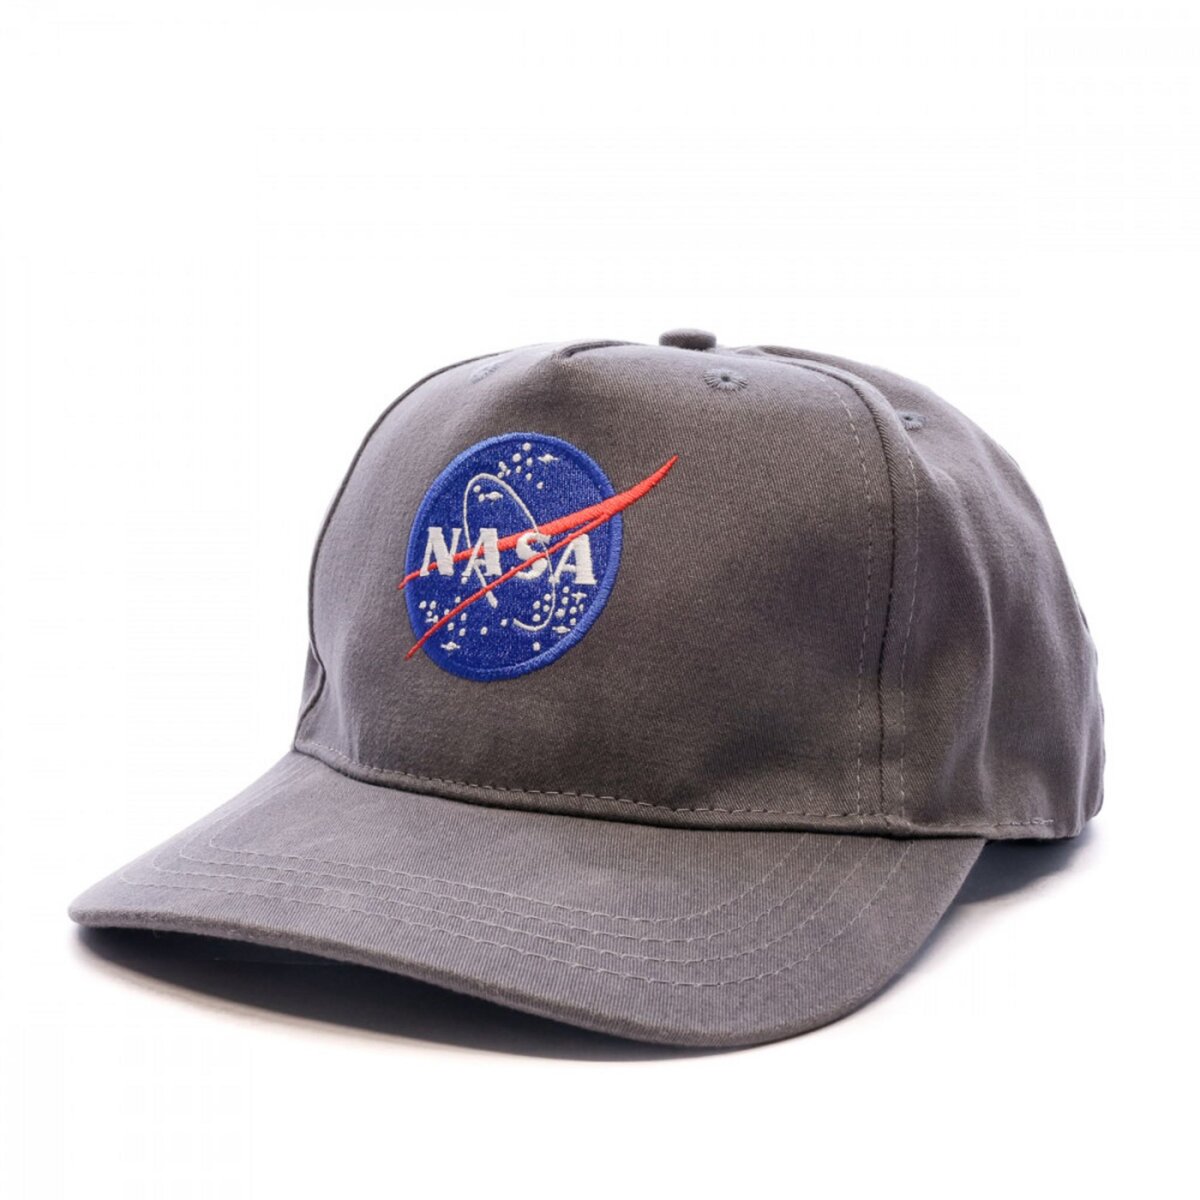 NASA Casquette Grise Homme Nasa 37C